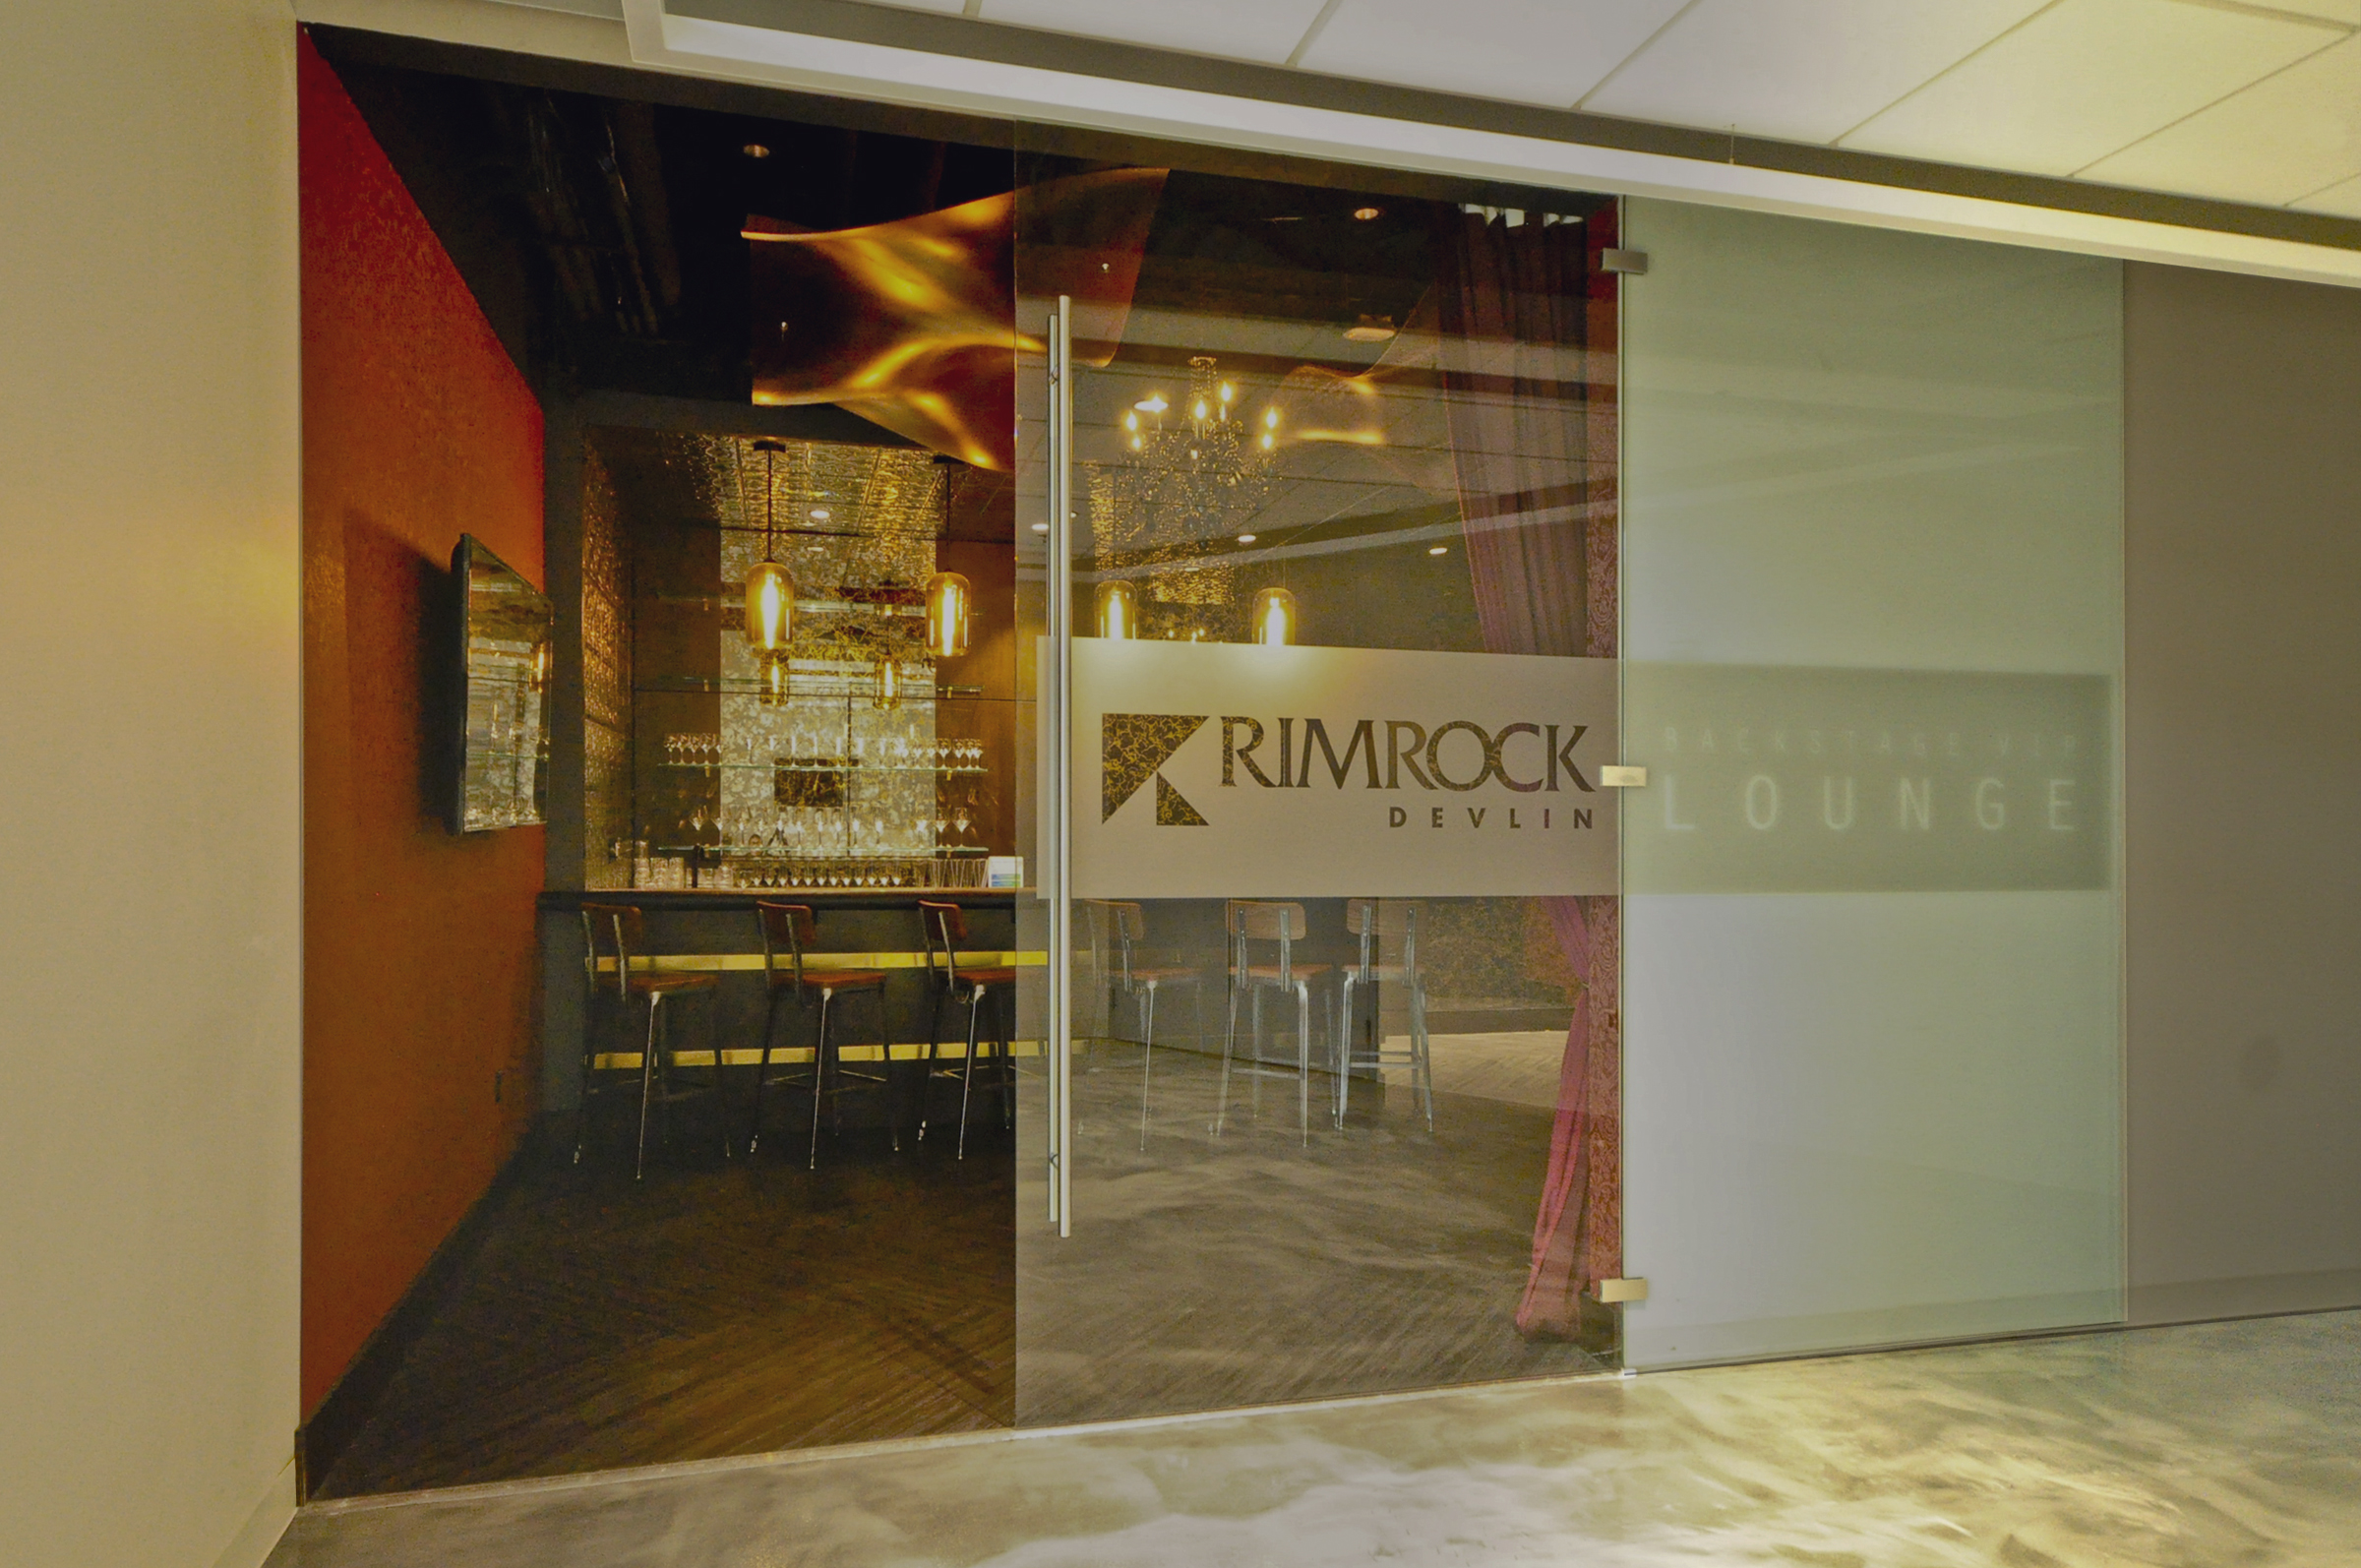 Rimrock | Devlin Lounge